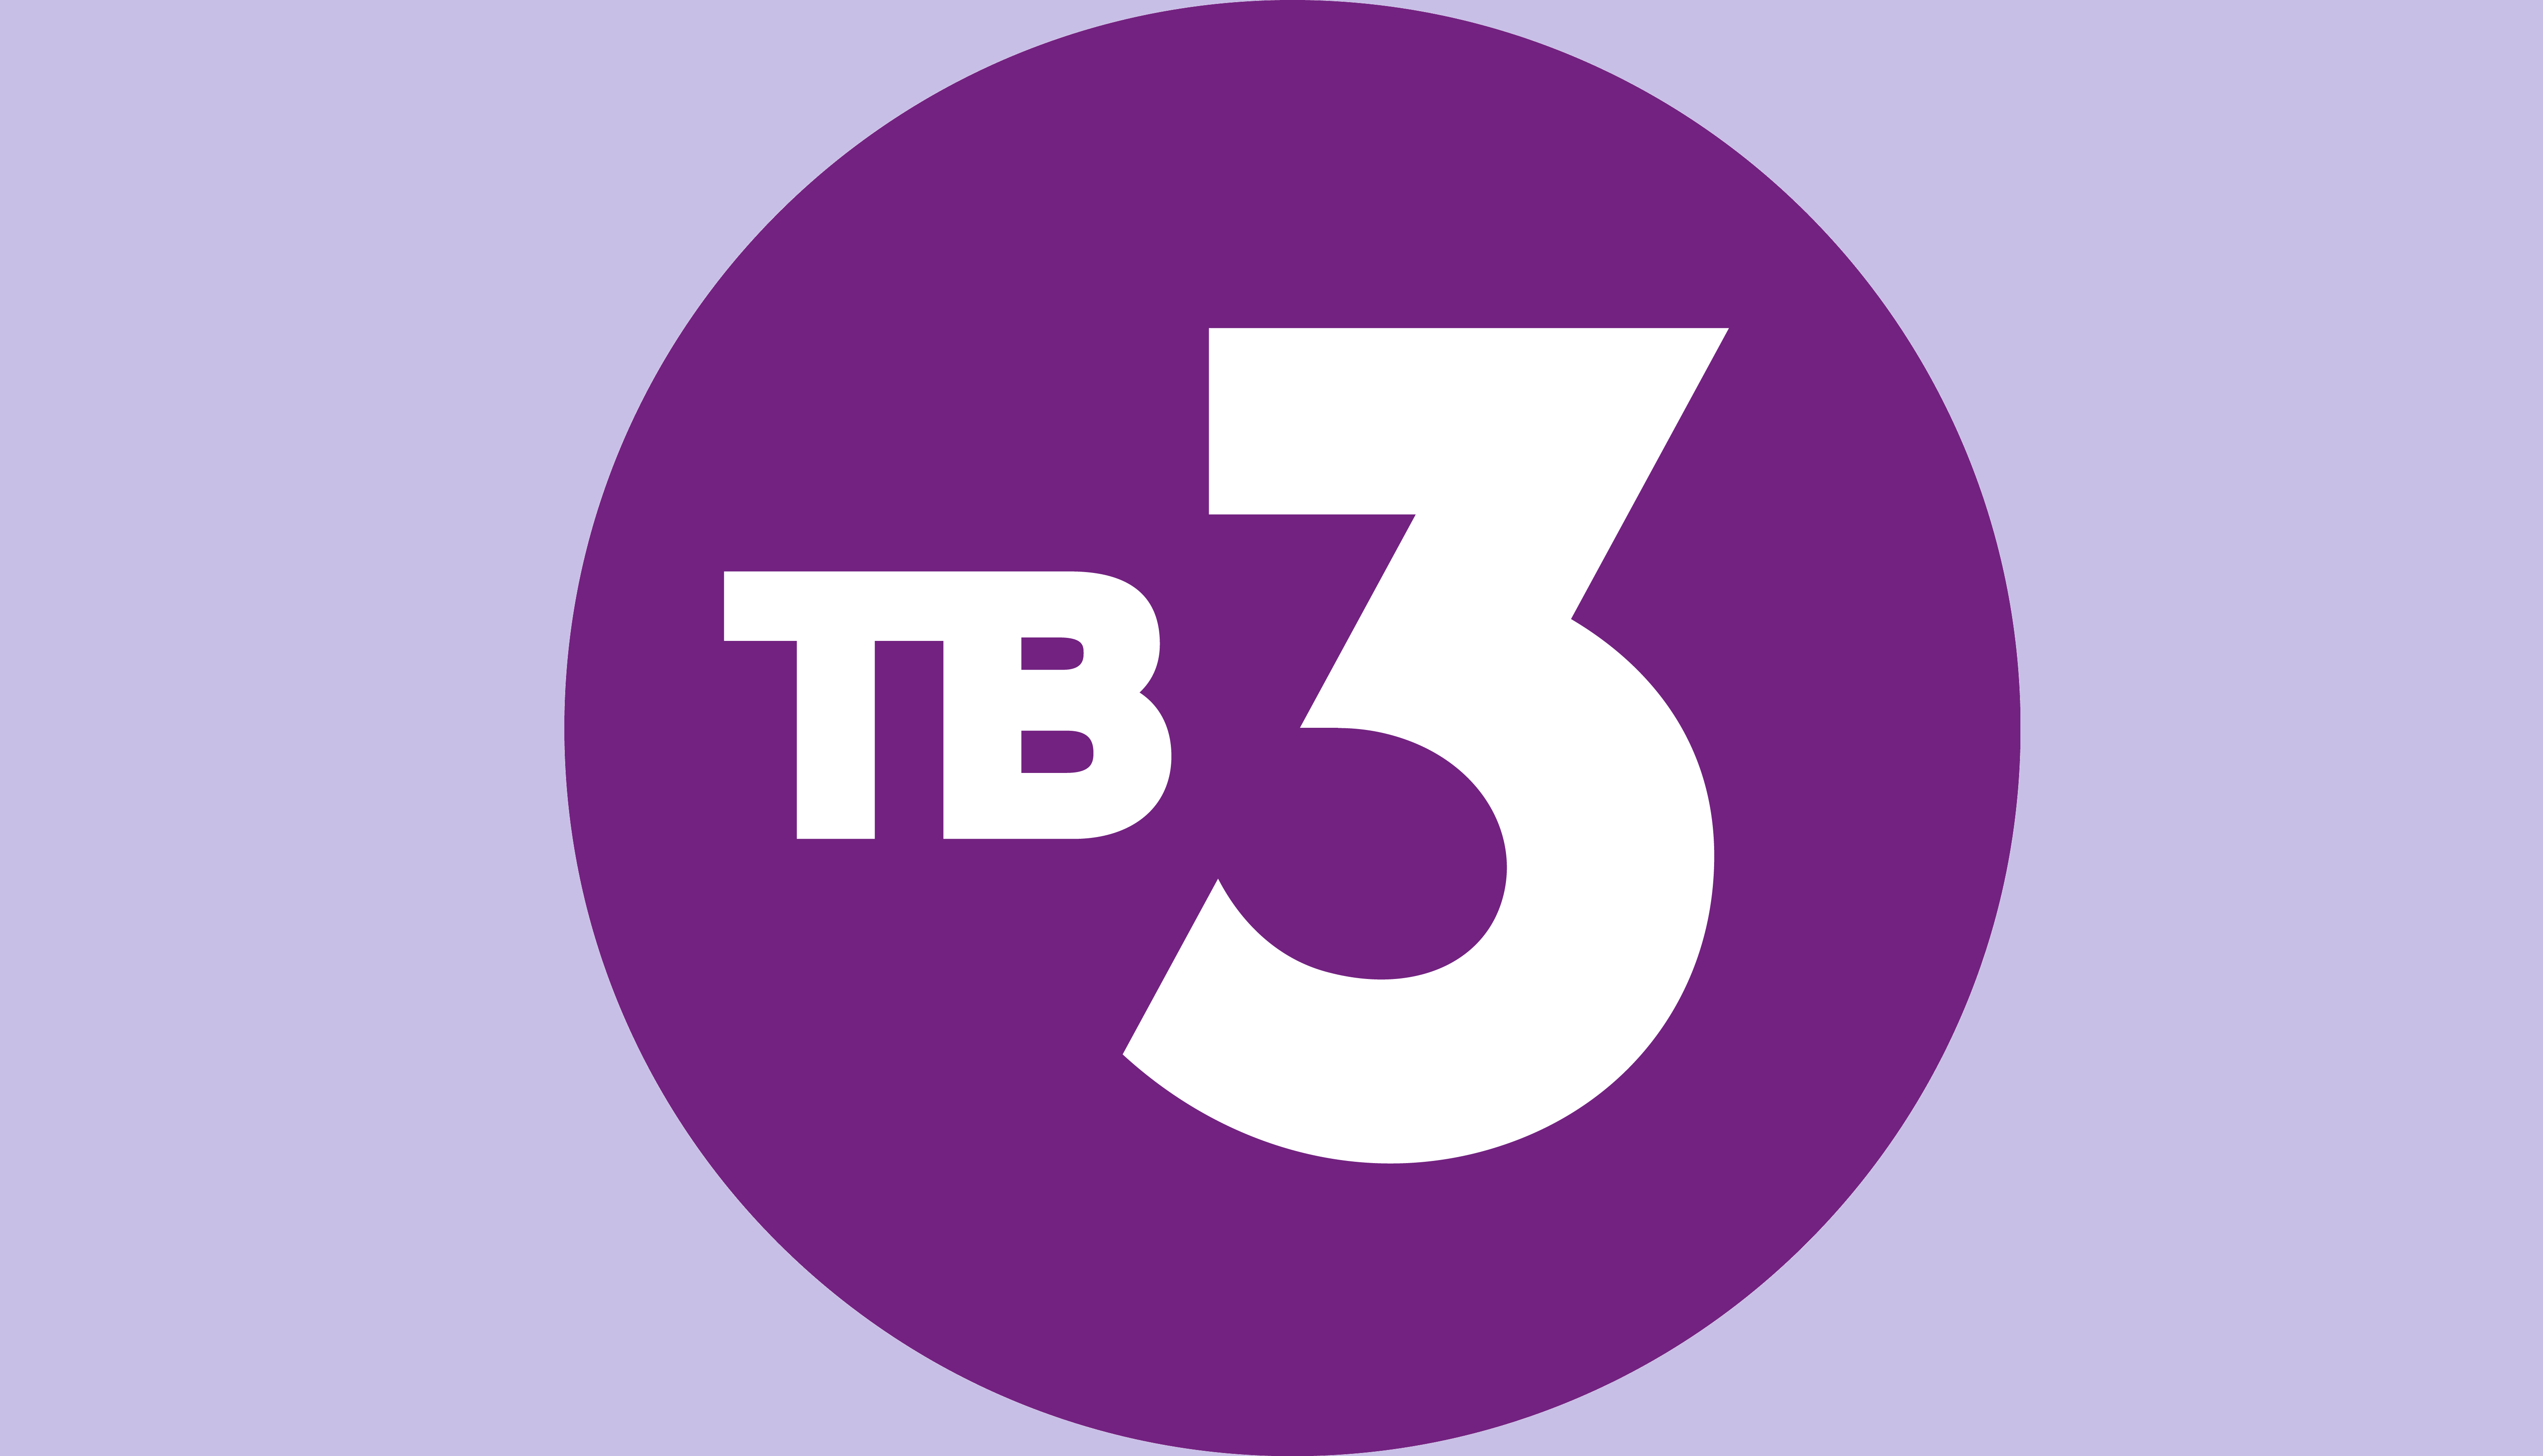 Трансляция 3 канала. Тв3 логотип. ТВ 3 эмблема. Телеканал тв3. Логотип канала тв3.